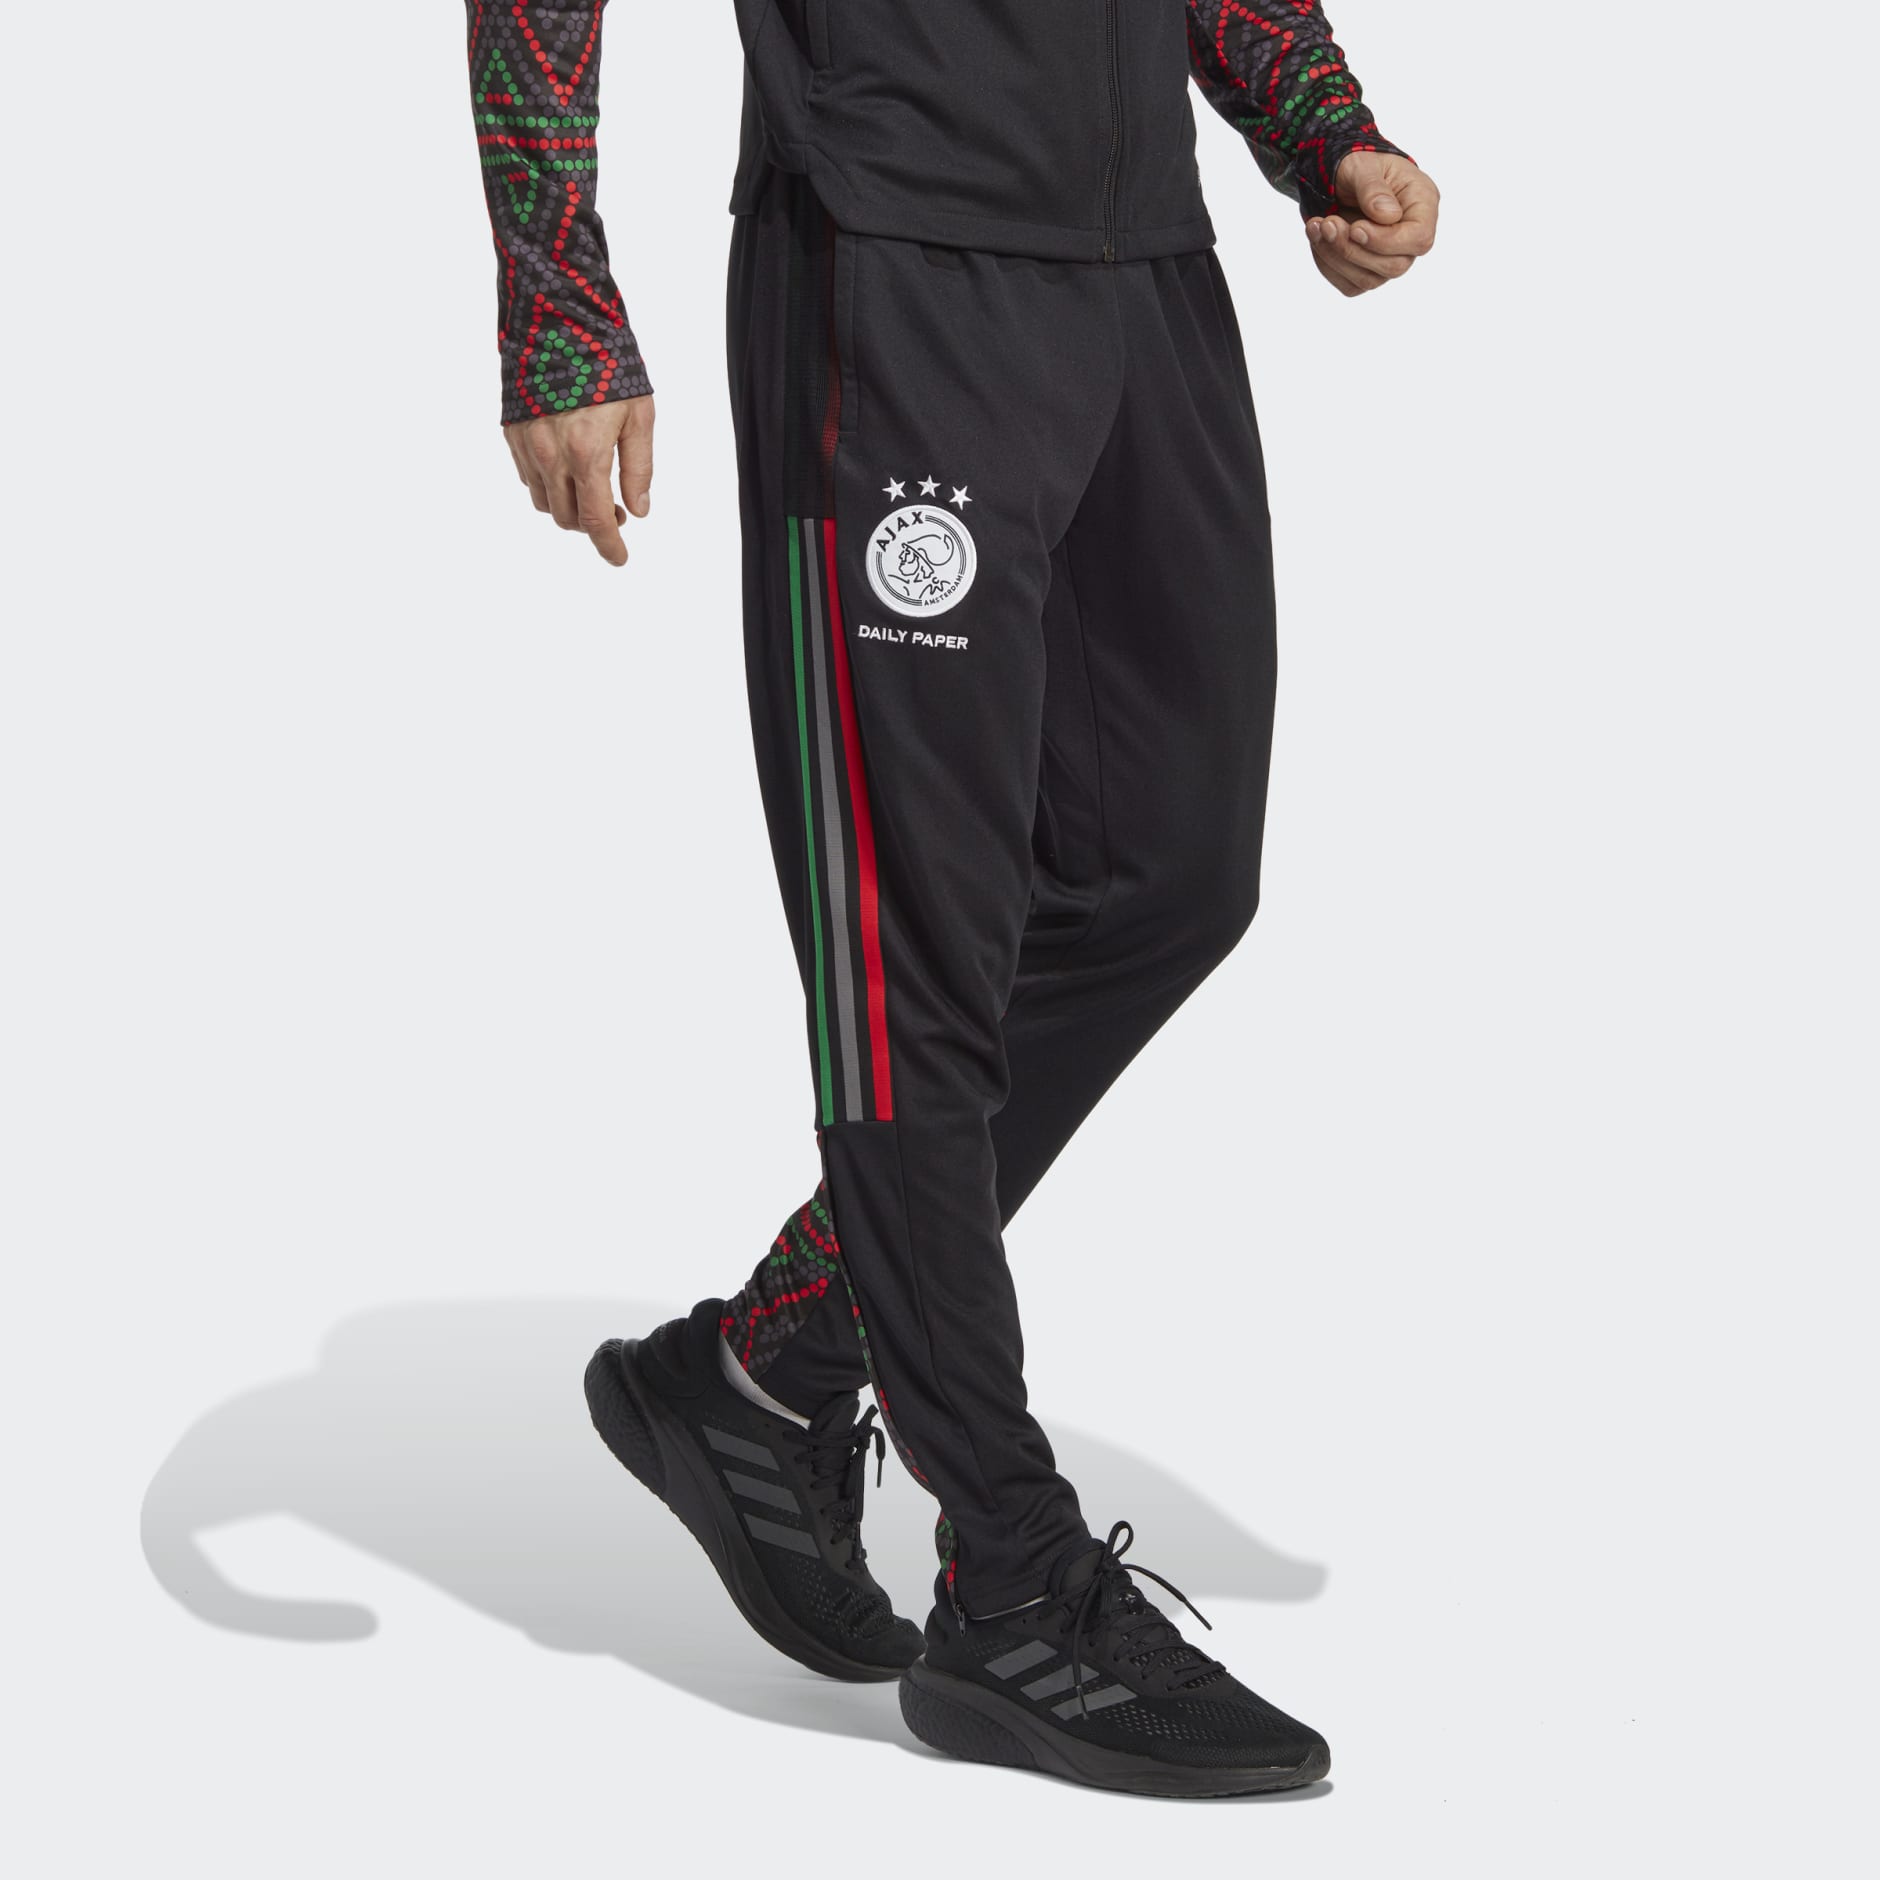 boog stikstof Vooruitgaan Men's Clothing - Ajax Amsterdam x Daily Paper Tiro 21 Track Pants - Black |  adidas Saudi Arabia